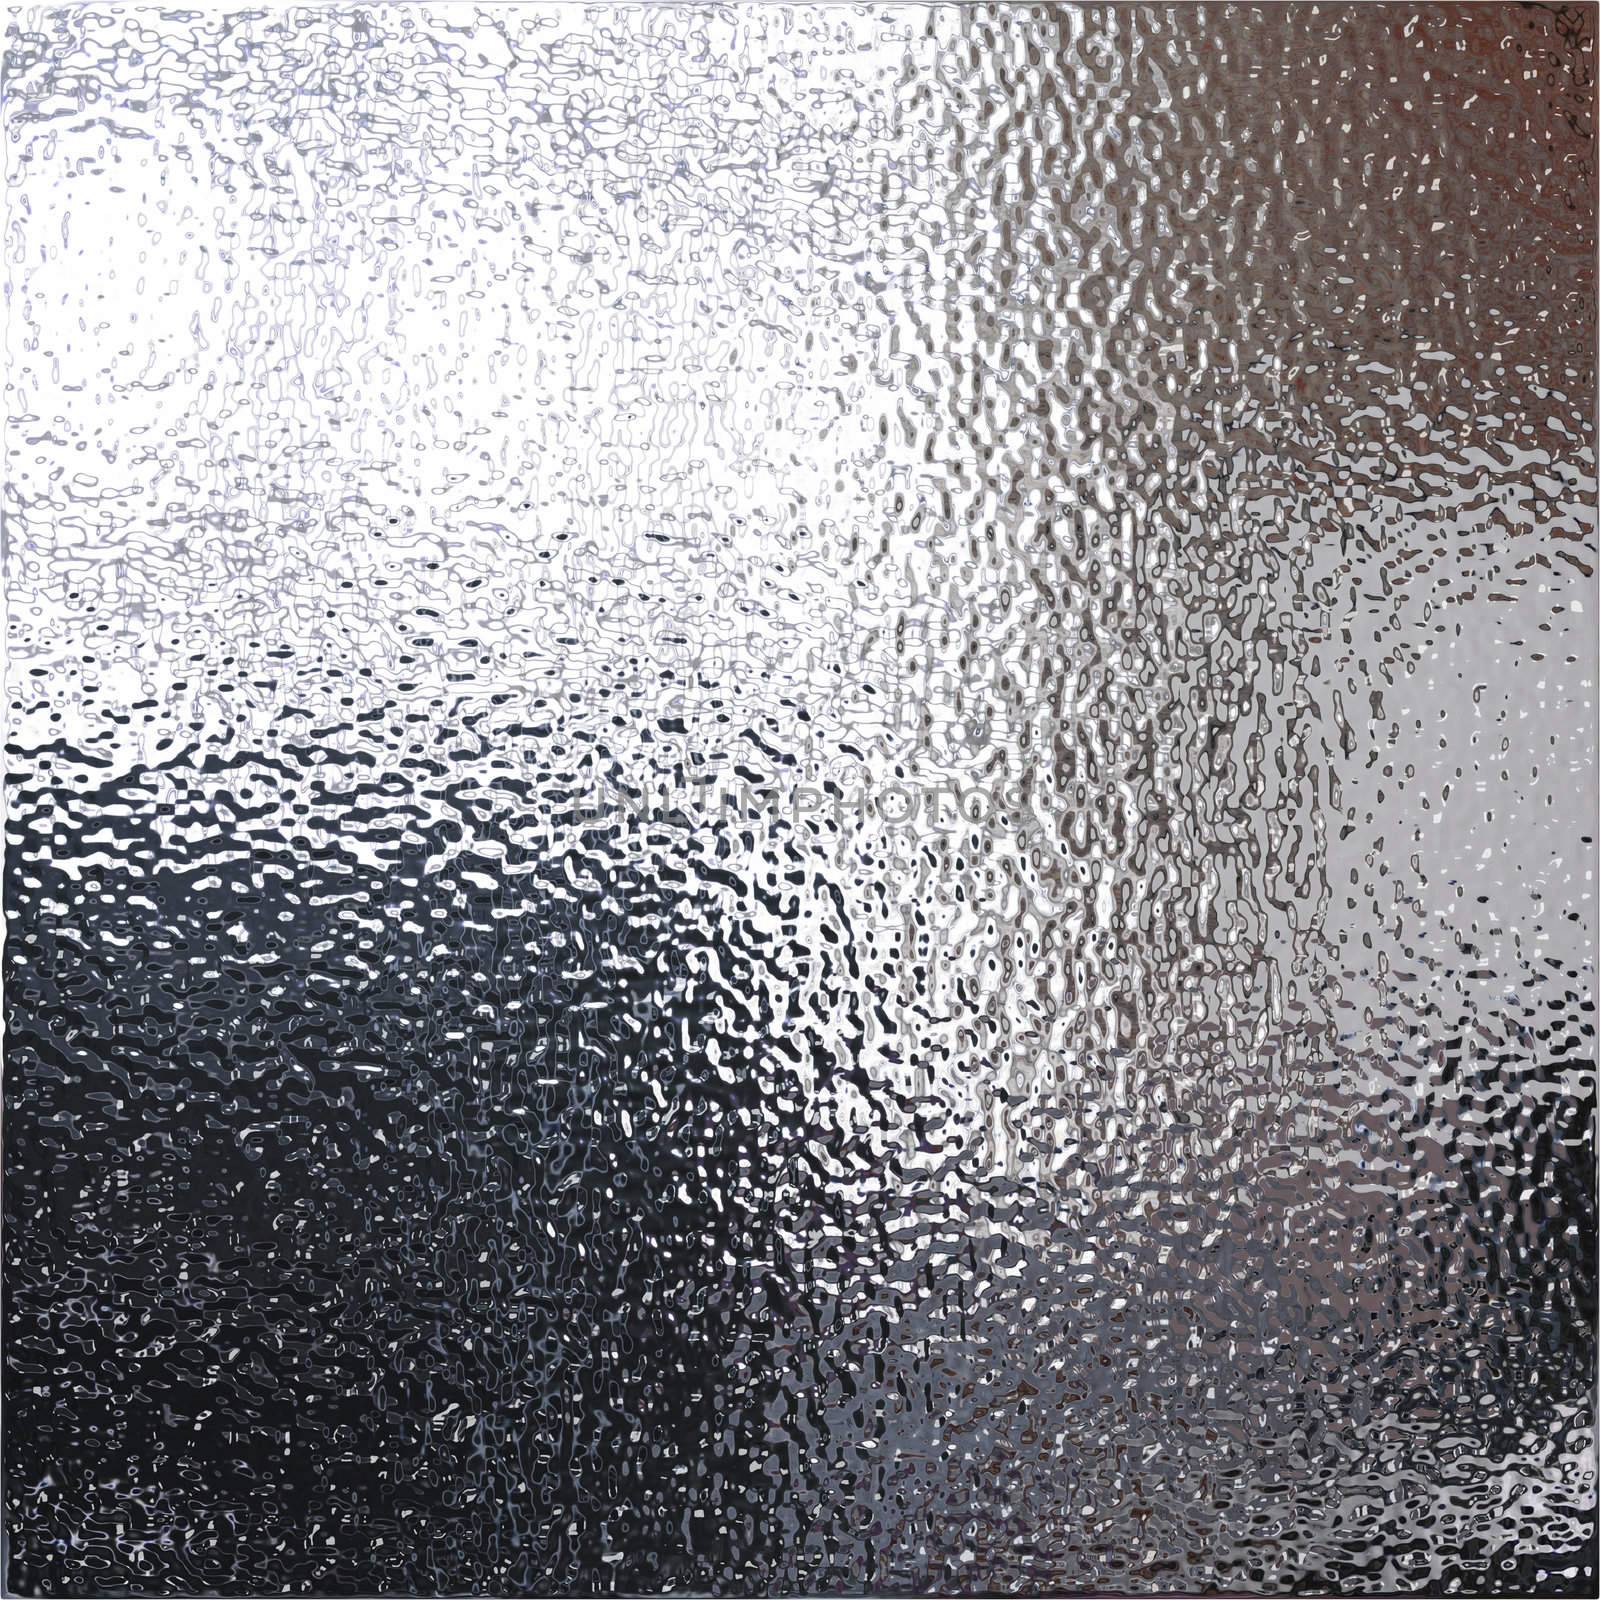 Metallic corrugated texture in silver tones